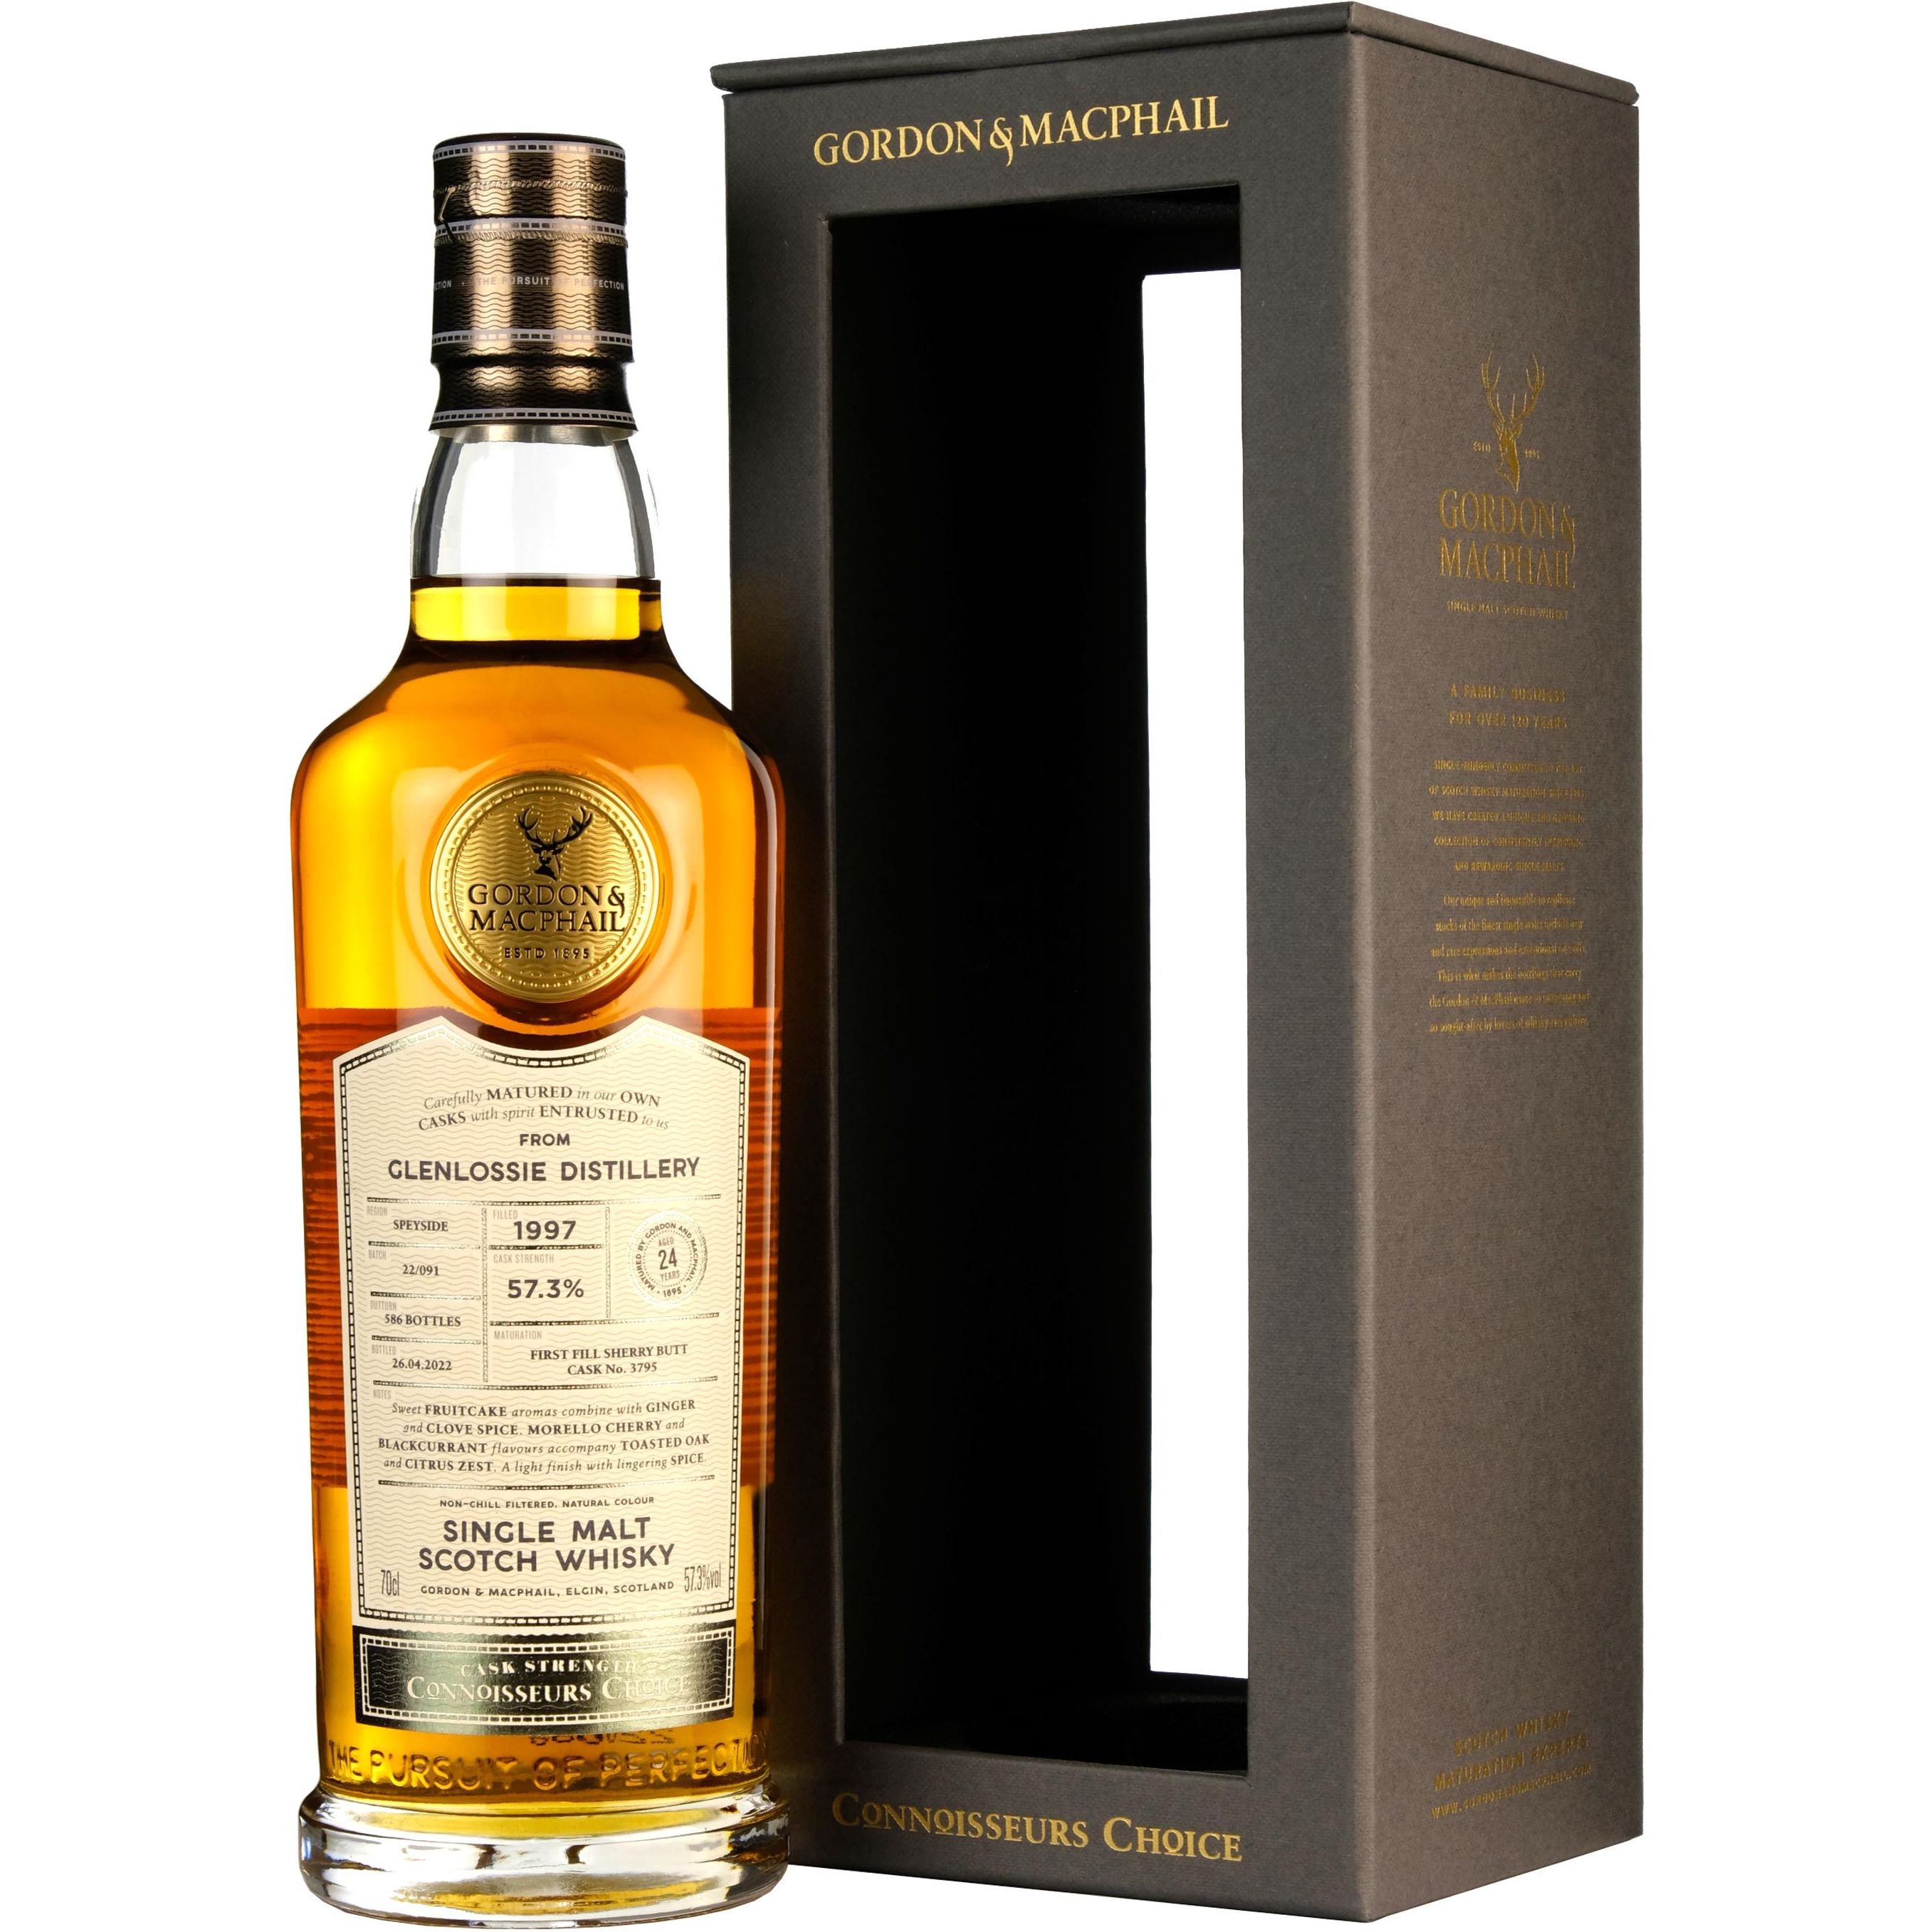 Виски Gordon & MacPhail Connoisseurs Choice Glenlossie 1997 Single Malt Scotch Whisky 57.3% 0.7 л в подарочной упаковке - фото 1